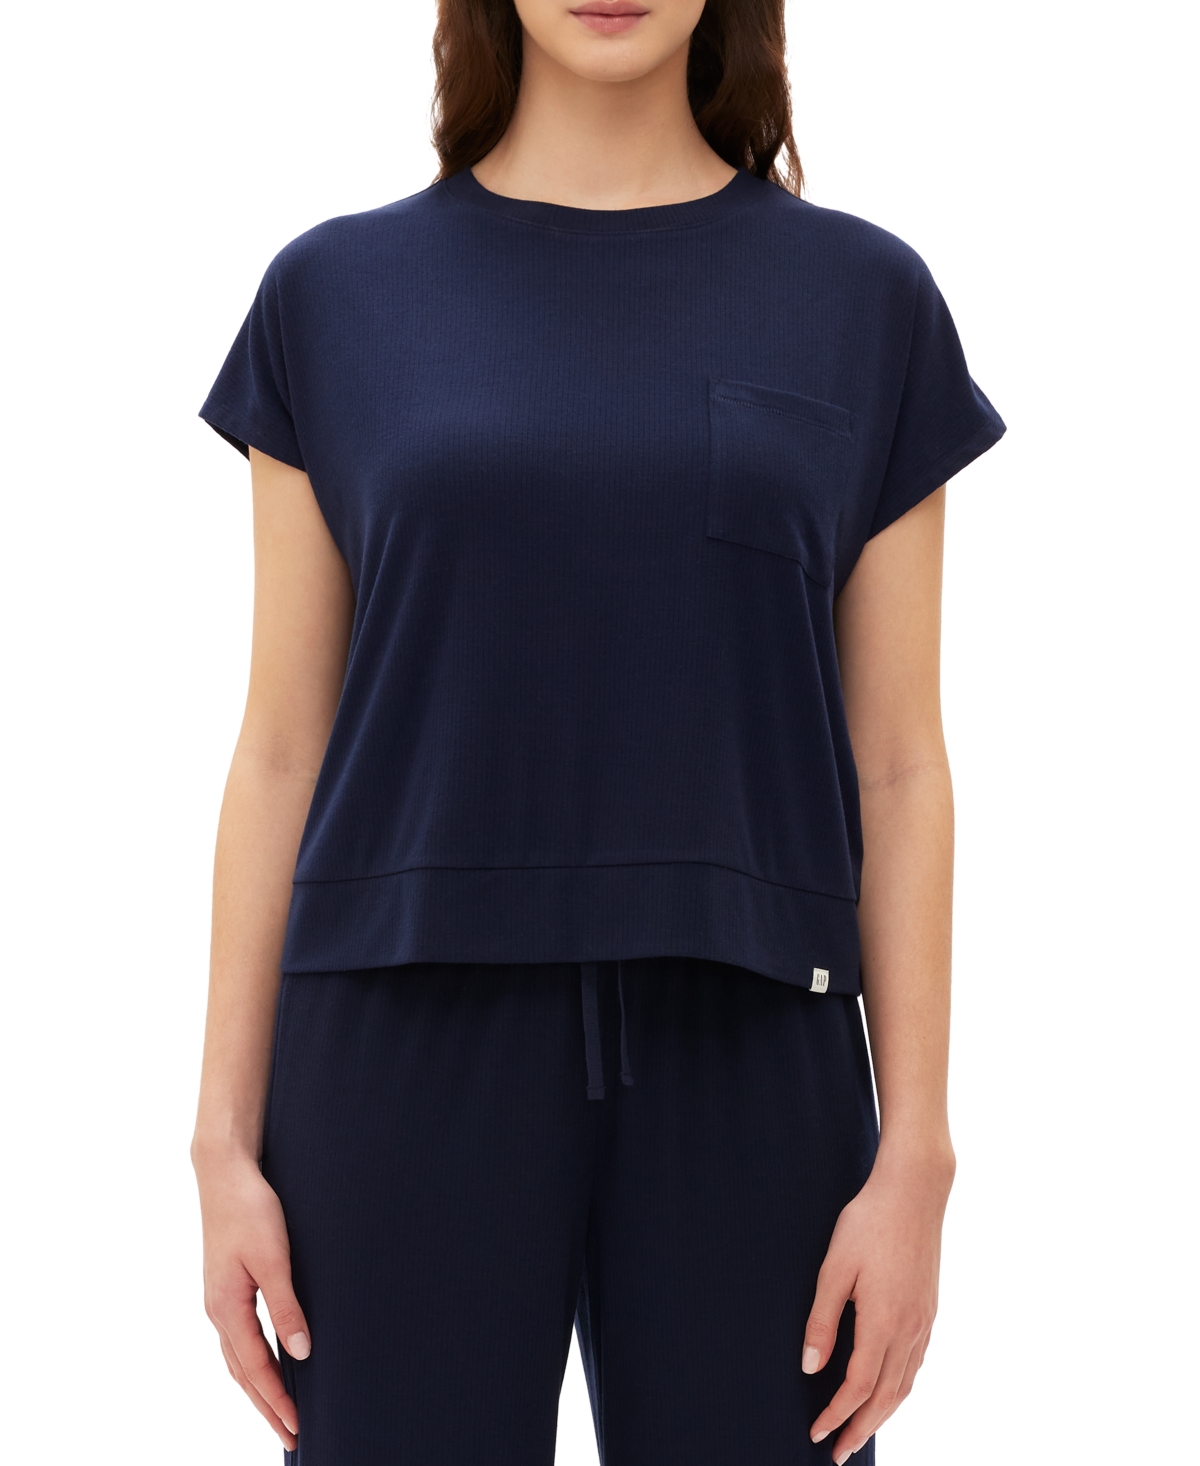 GapBody Women's Ribbed Short-Sleeve Pajama Top - Oatmeal